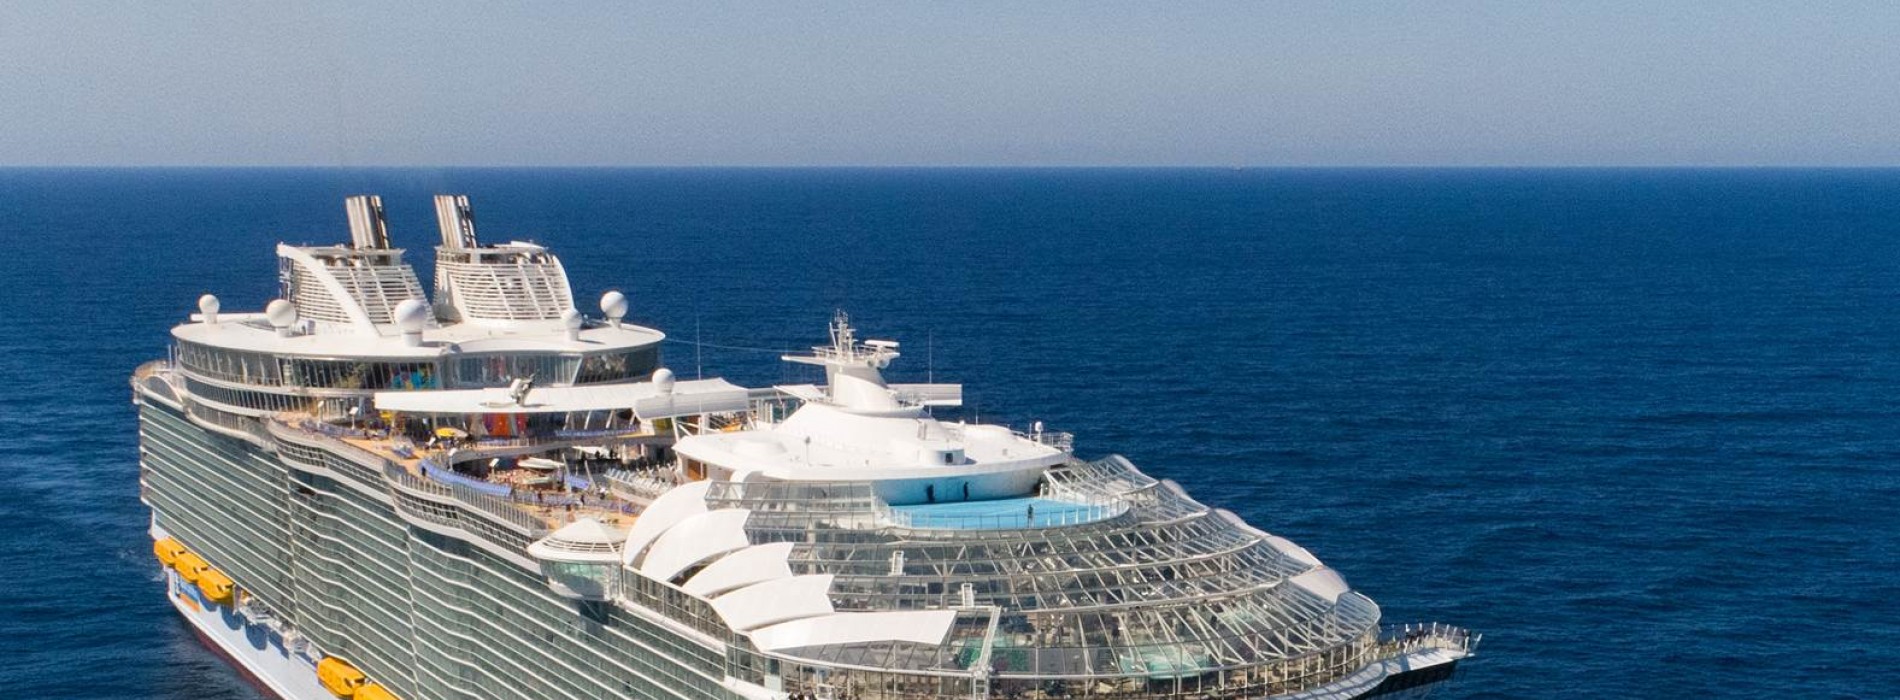 TIRUN Travel Marketing Royal Caribbean welcomes the world’s largest cruise ship